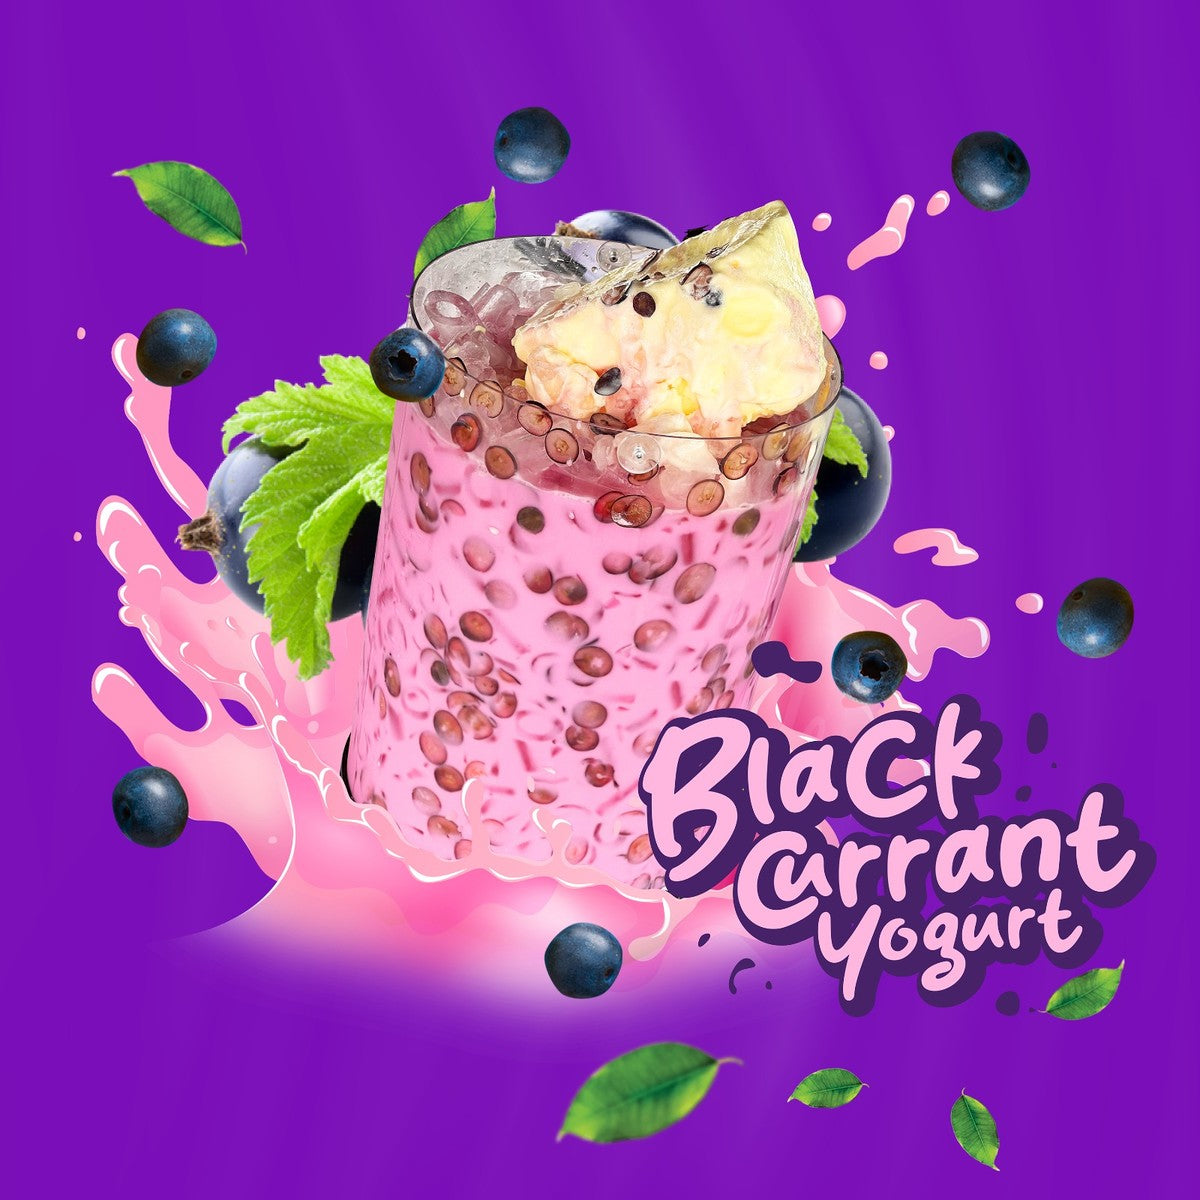 Blackcurrant yogurt